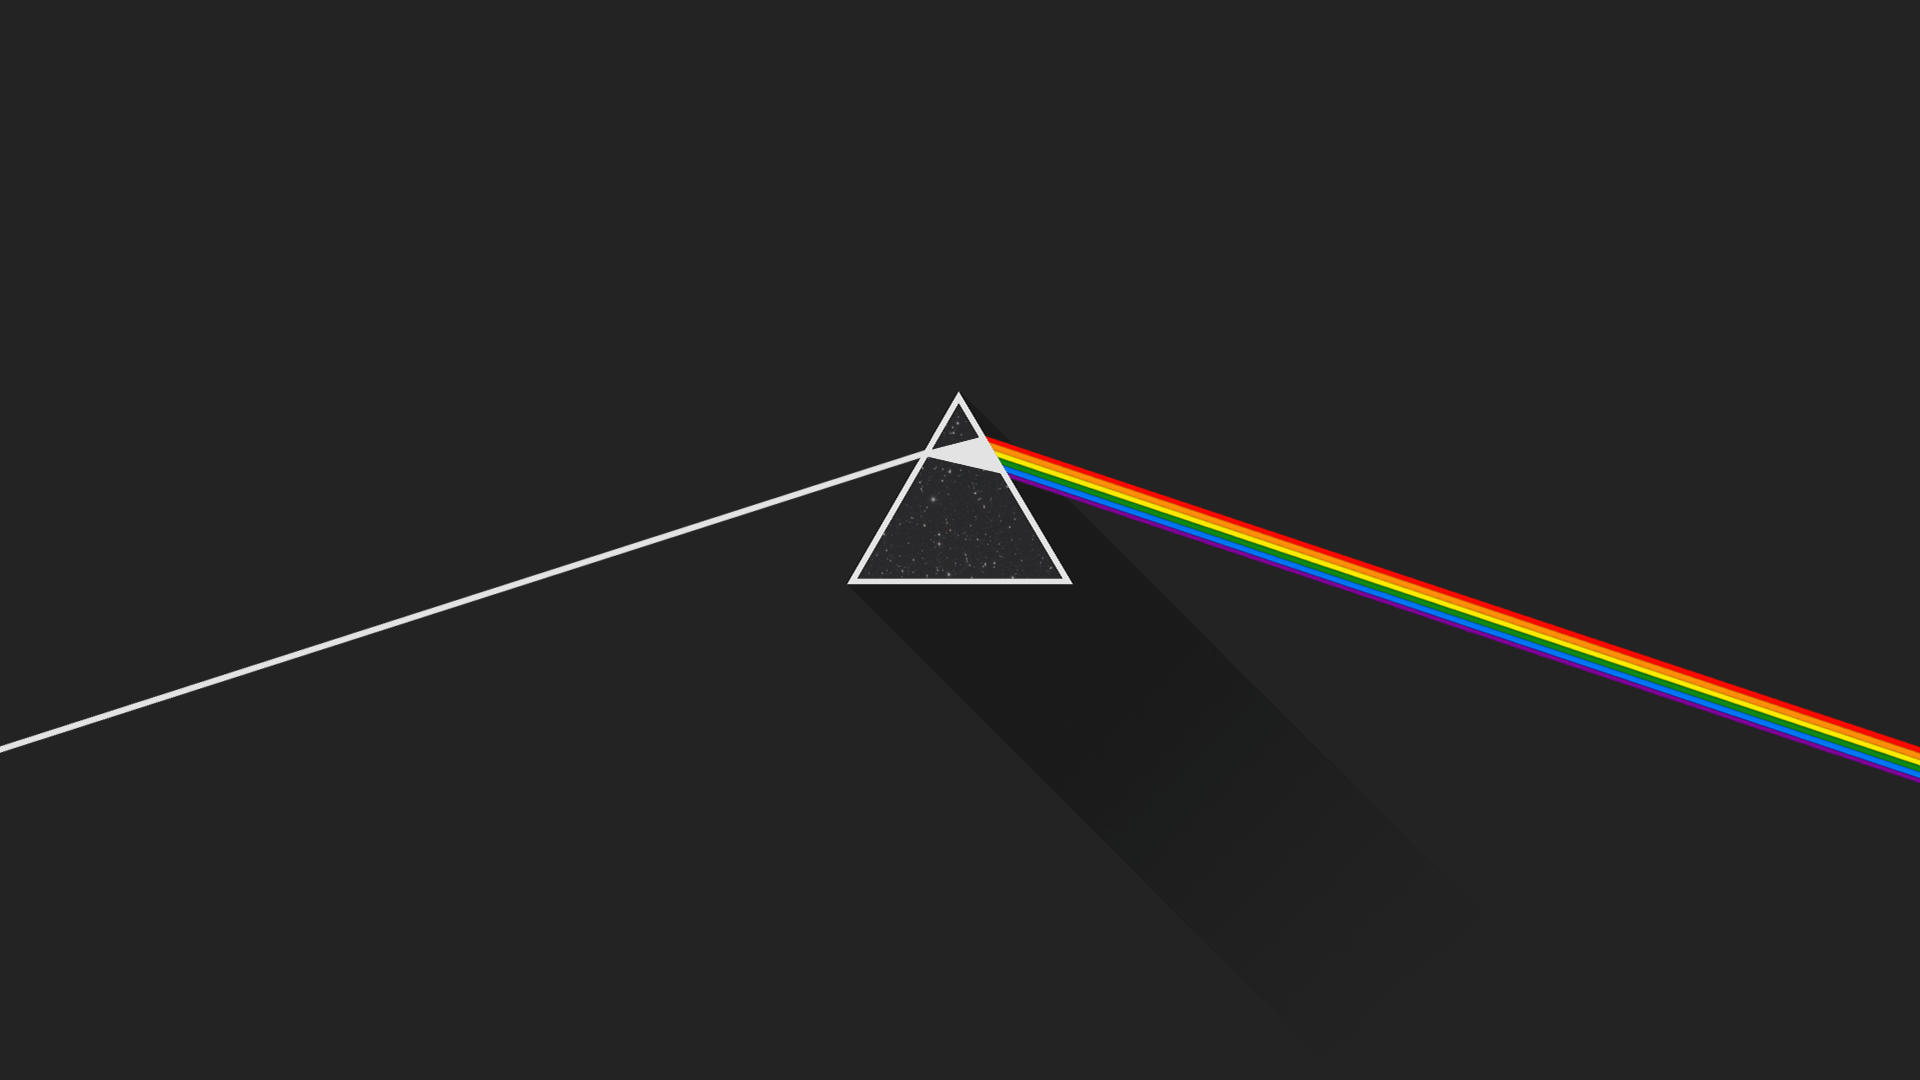 Pink Floyd Prism Wallpaper.png 920×080 Pixels. Pink Floyd